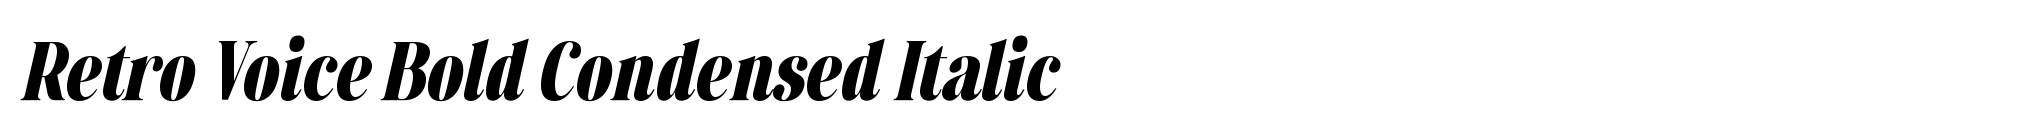 Retro Voice Bold Condensed Italic image